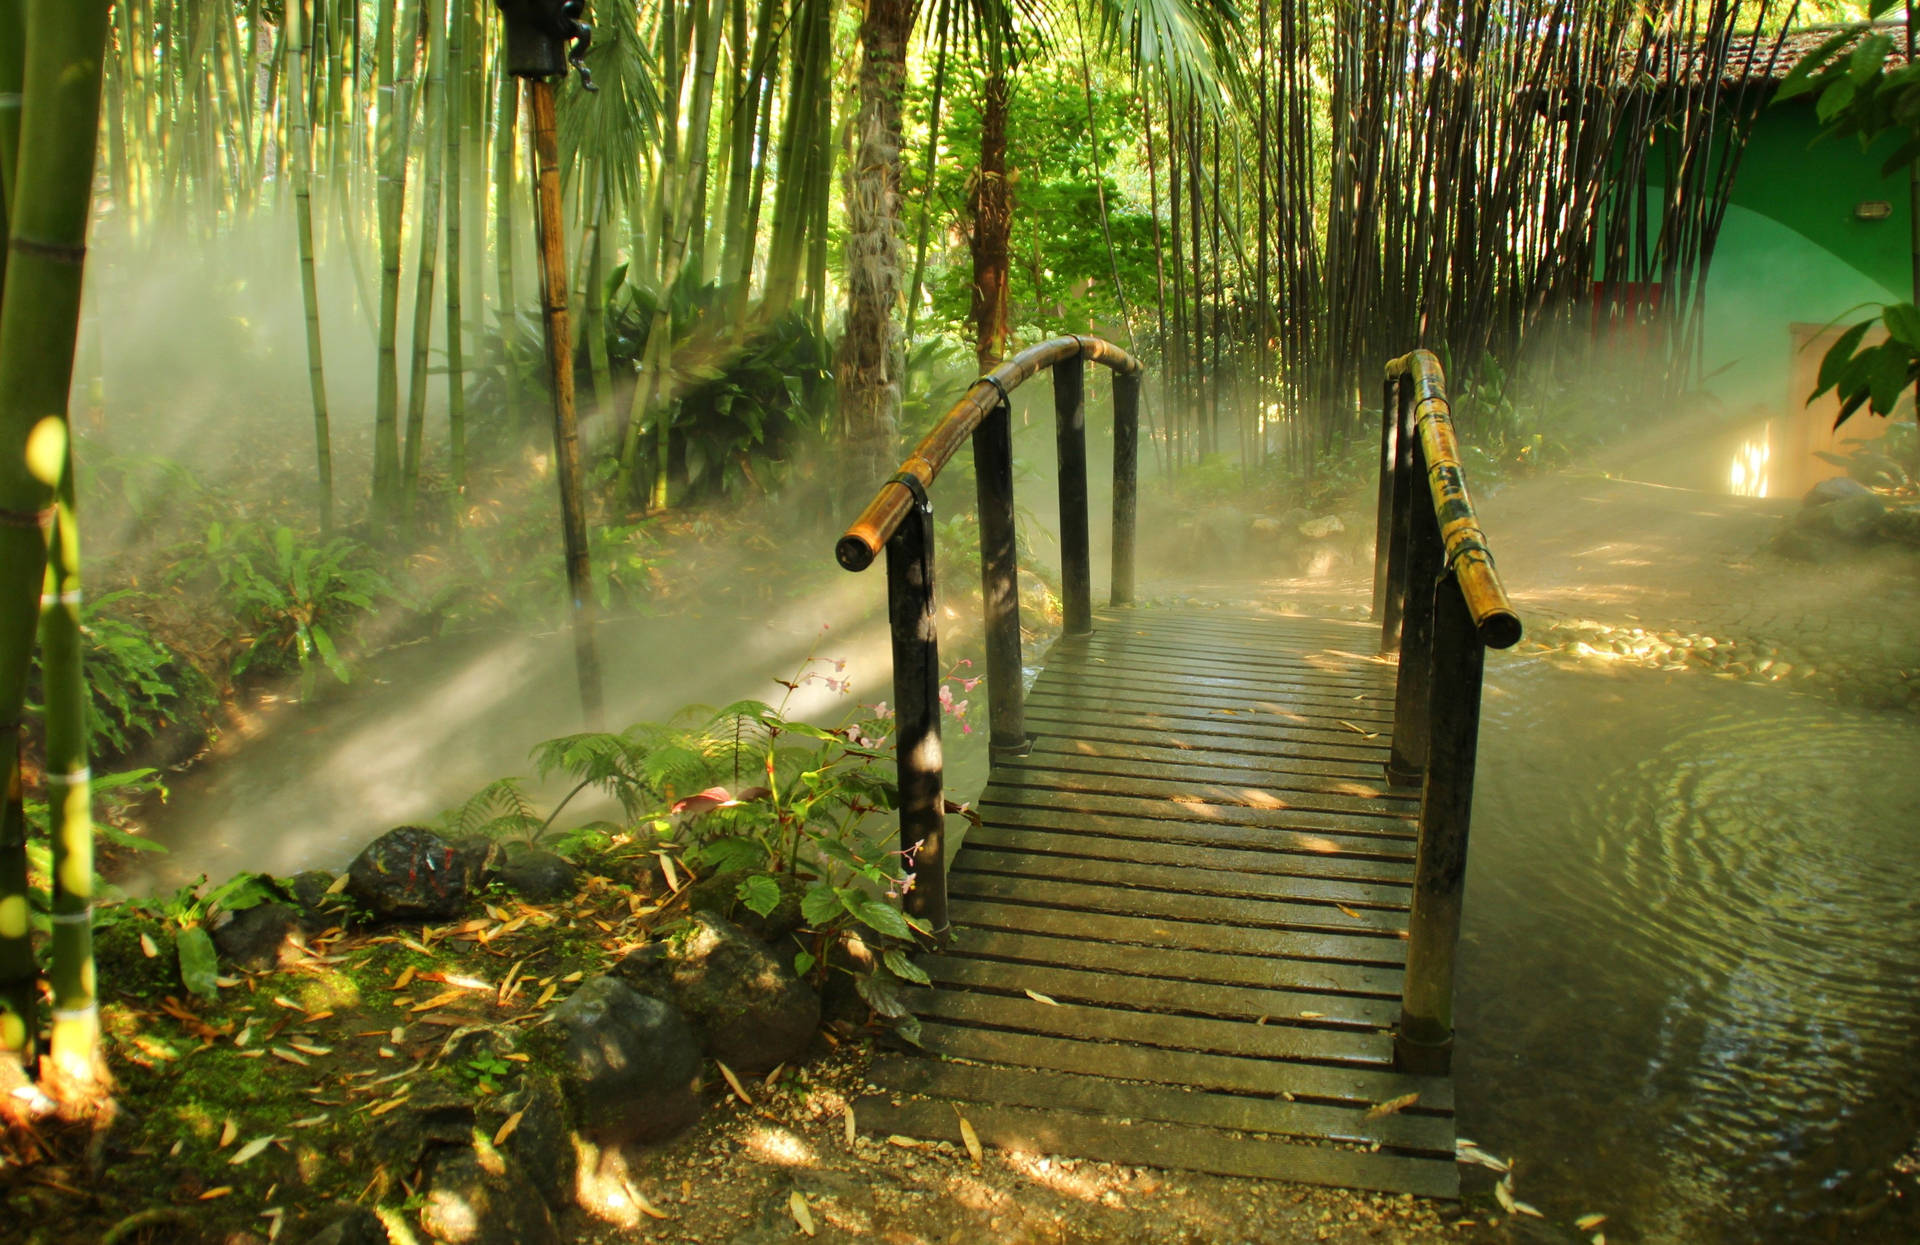 Bamboo 4k Forest Garden With Bridge